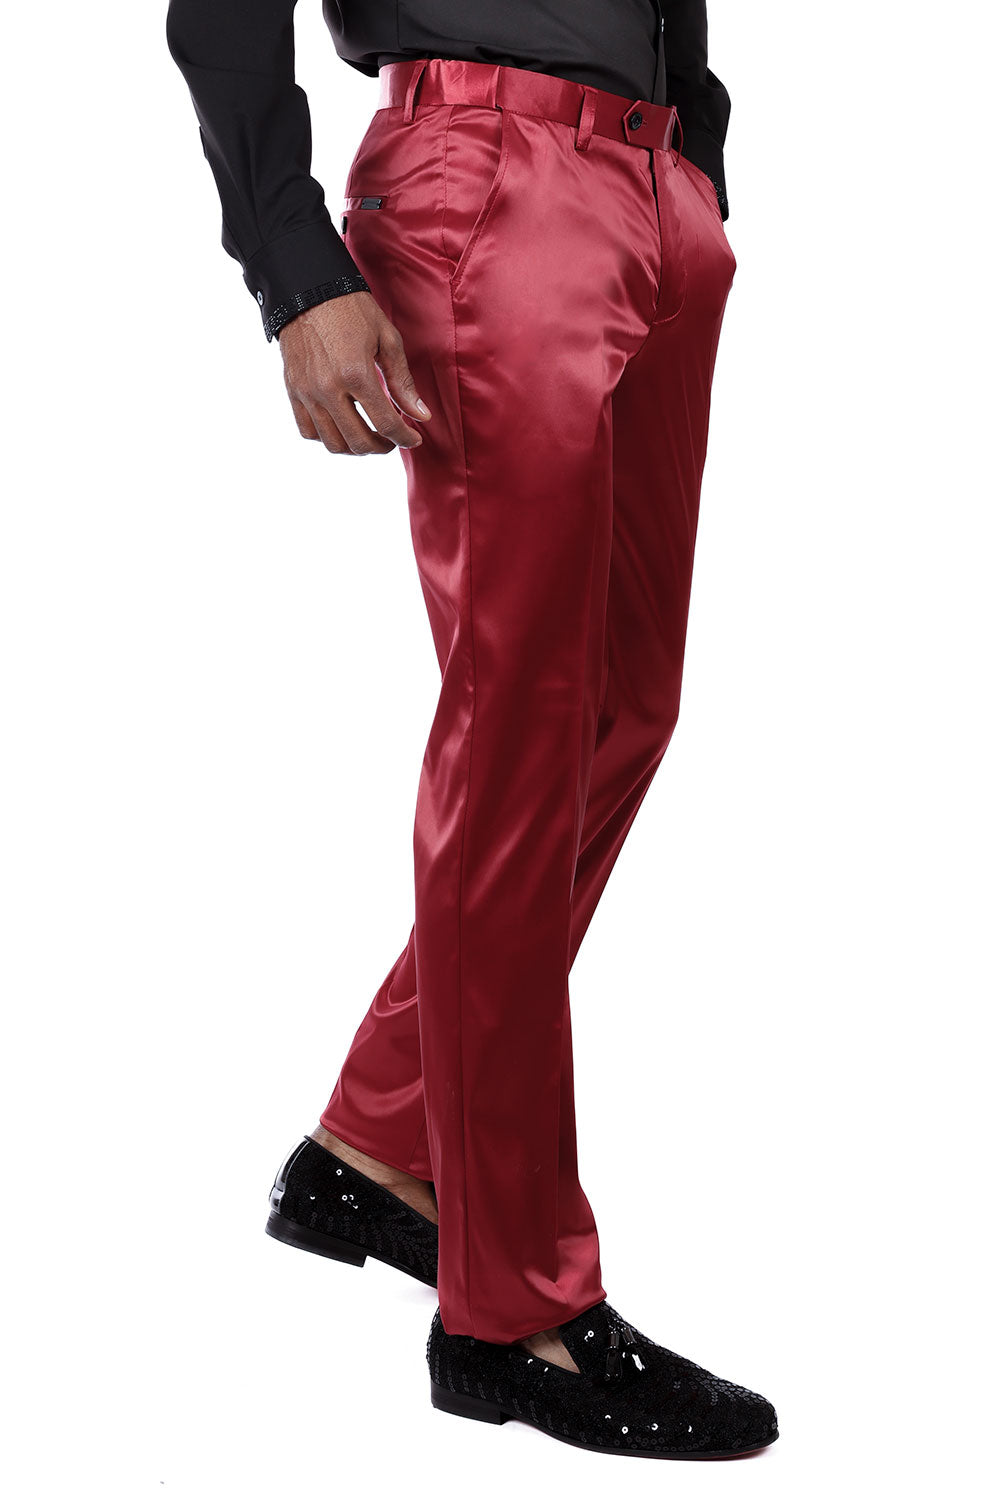 BARABAS Men's Solid Color Shiny Chino Pants VP1010 Maroon